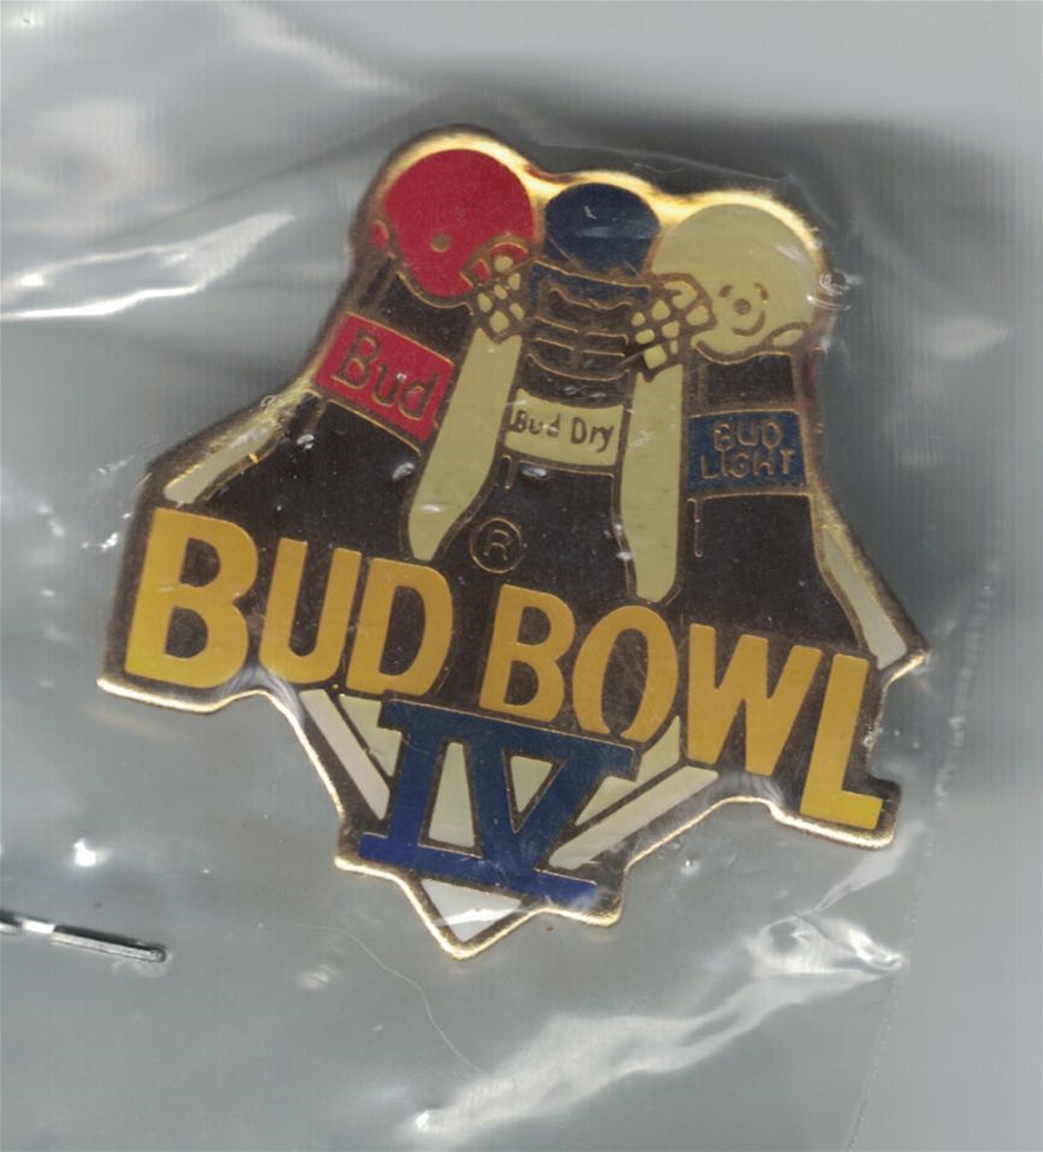 Bud Bowl IV Pin